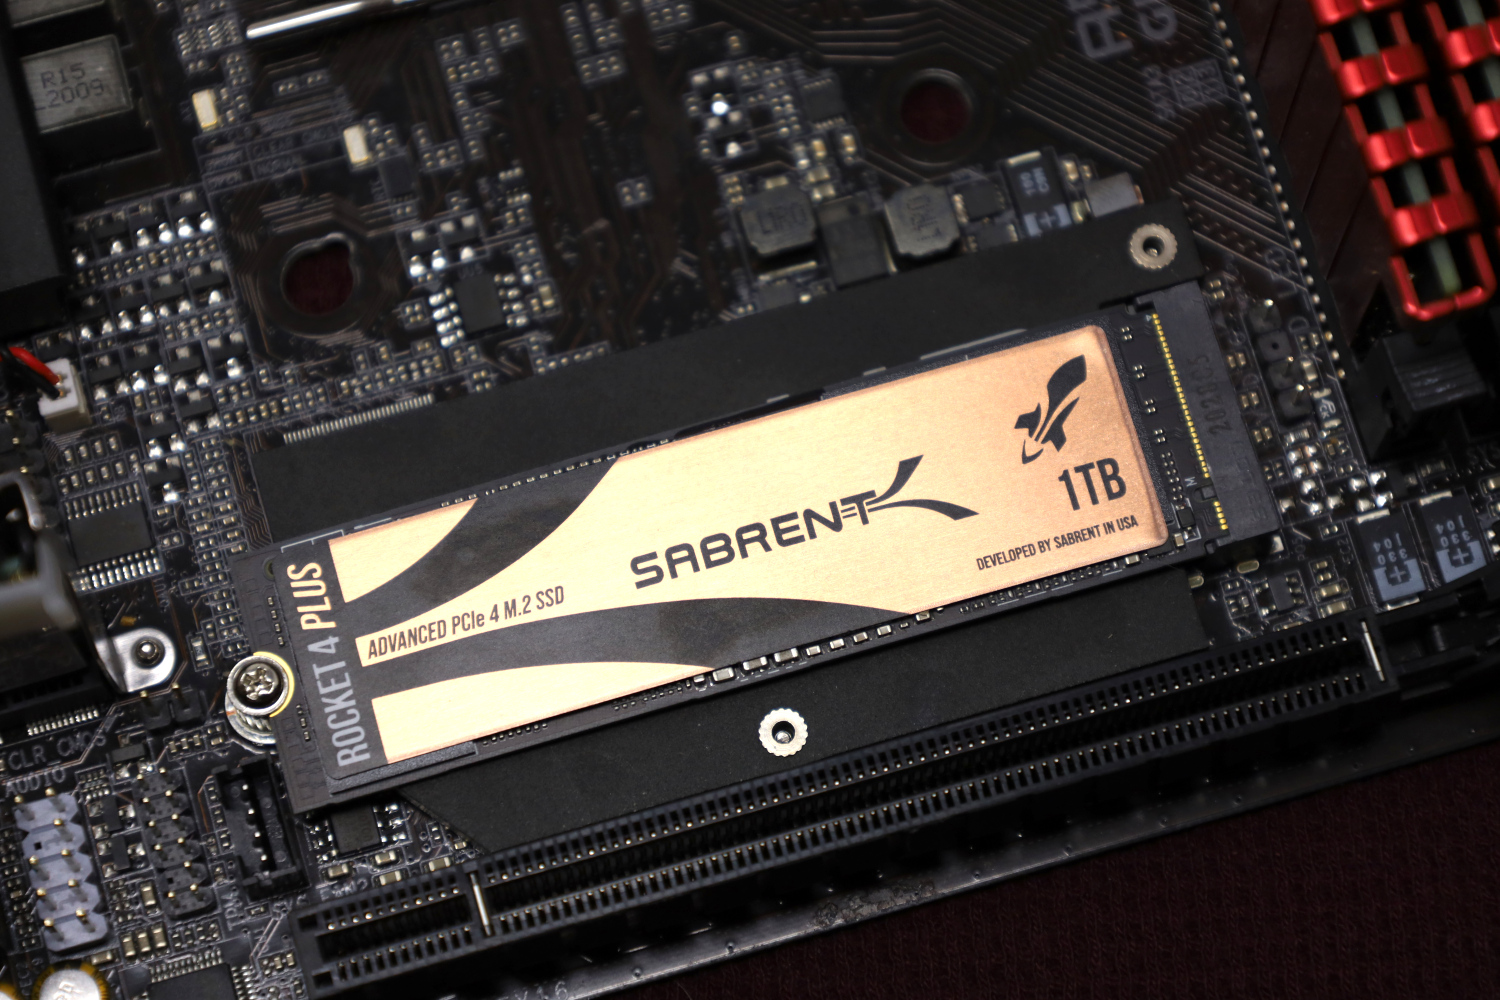 SABRENT Rocket 4 Plus SSD with Heatsink 2TB PCIe Gen 4 NVMe M.2